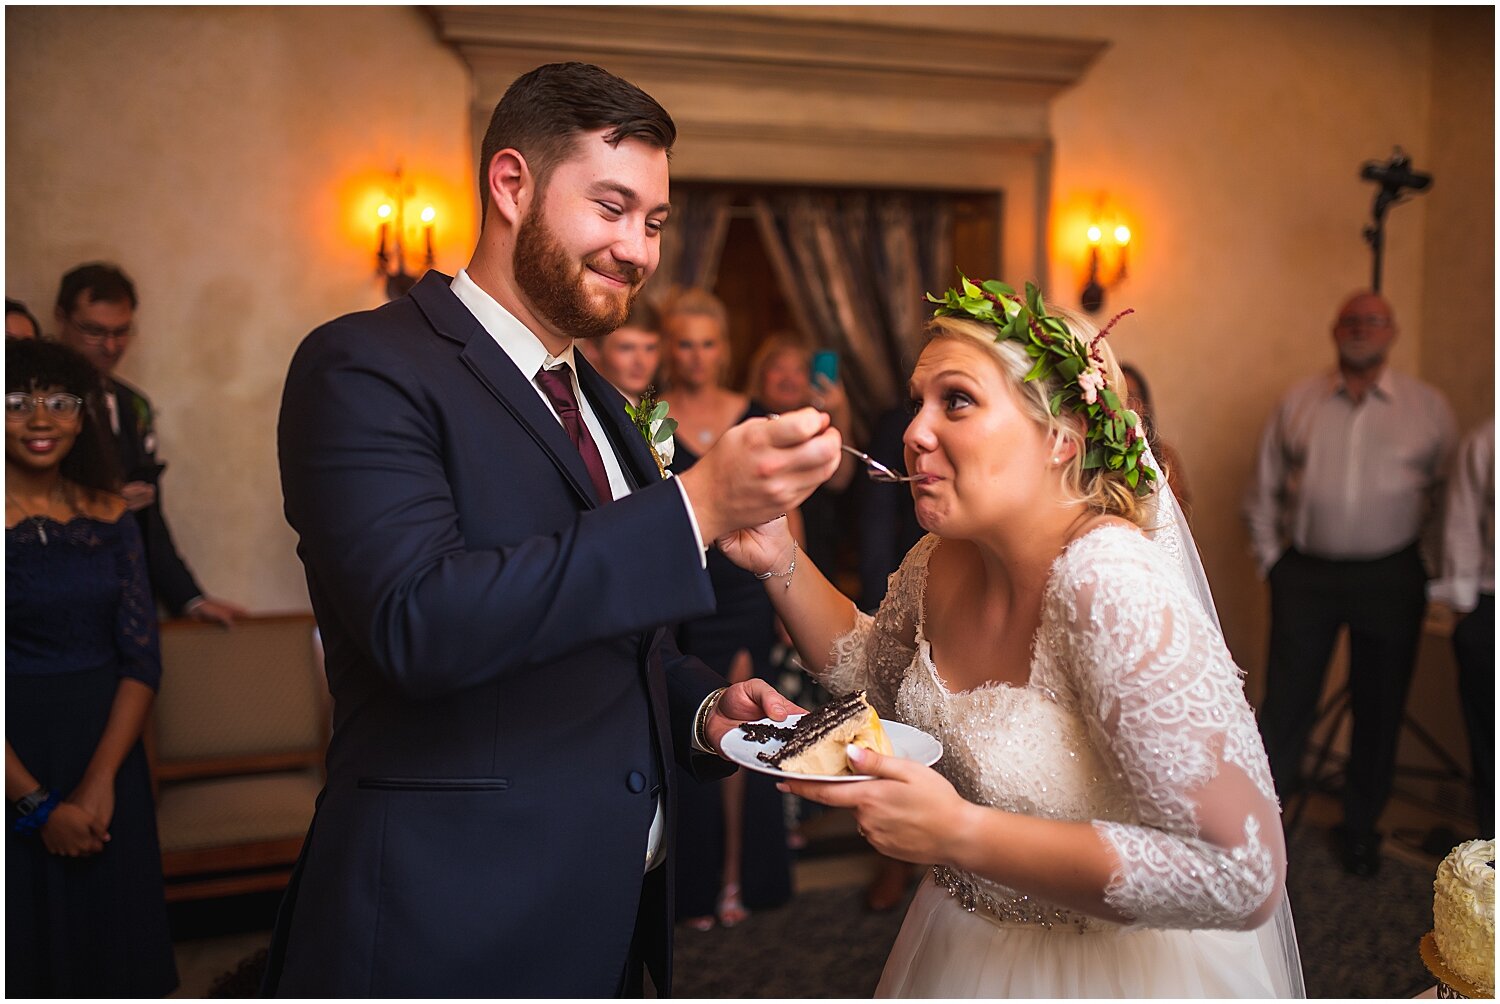  bride and groom eating their wedding cake 